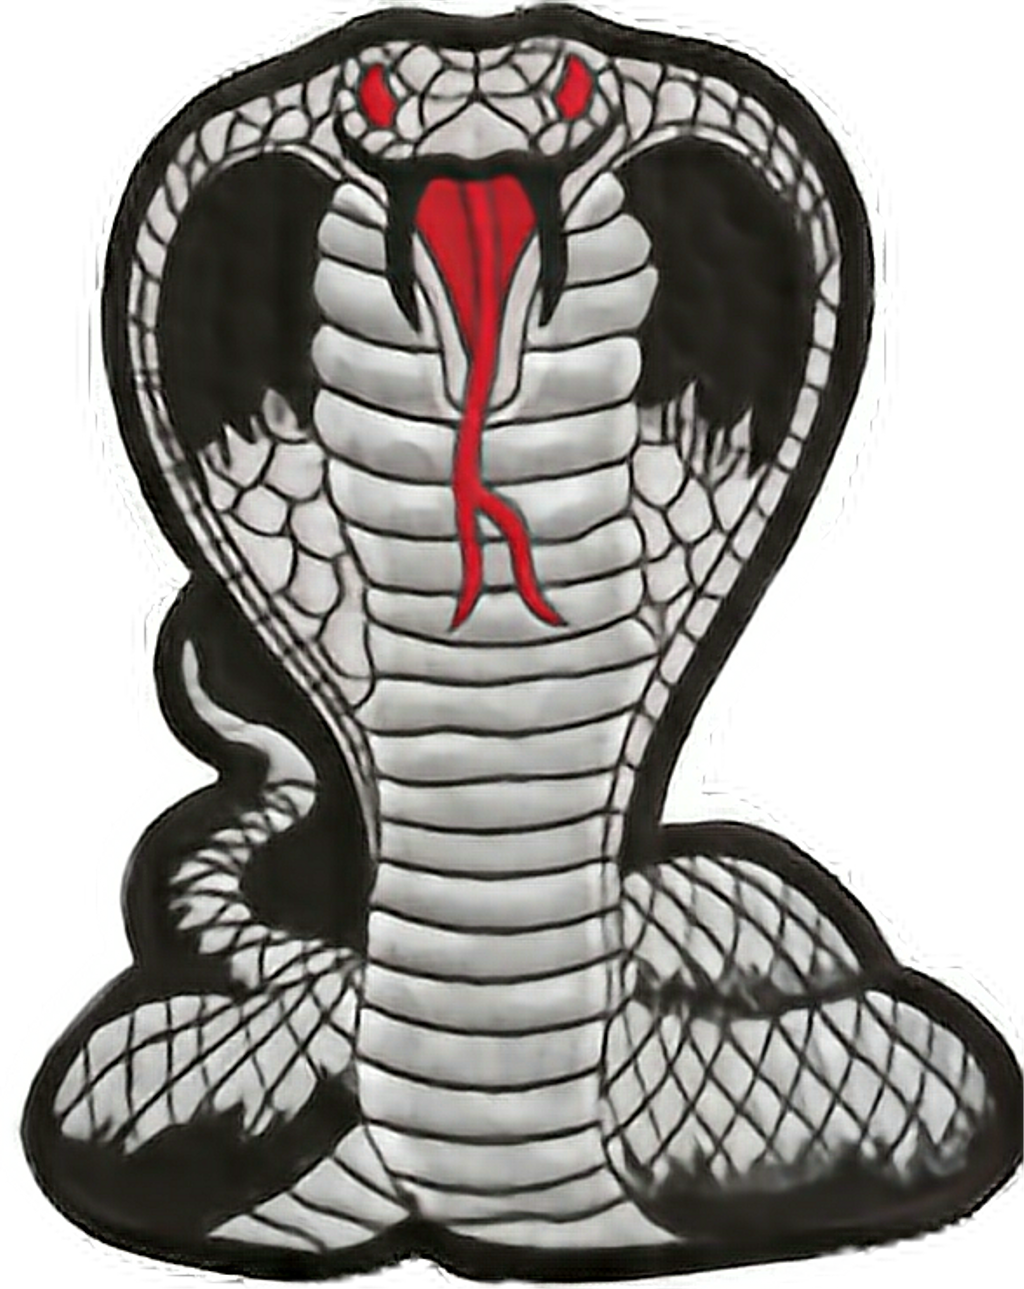 King Cobra Cartoon Illustration PNG image